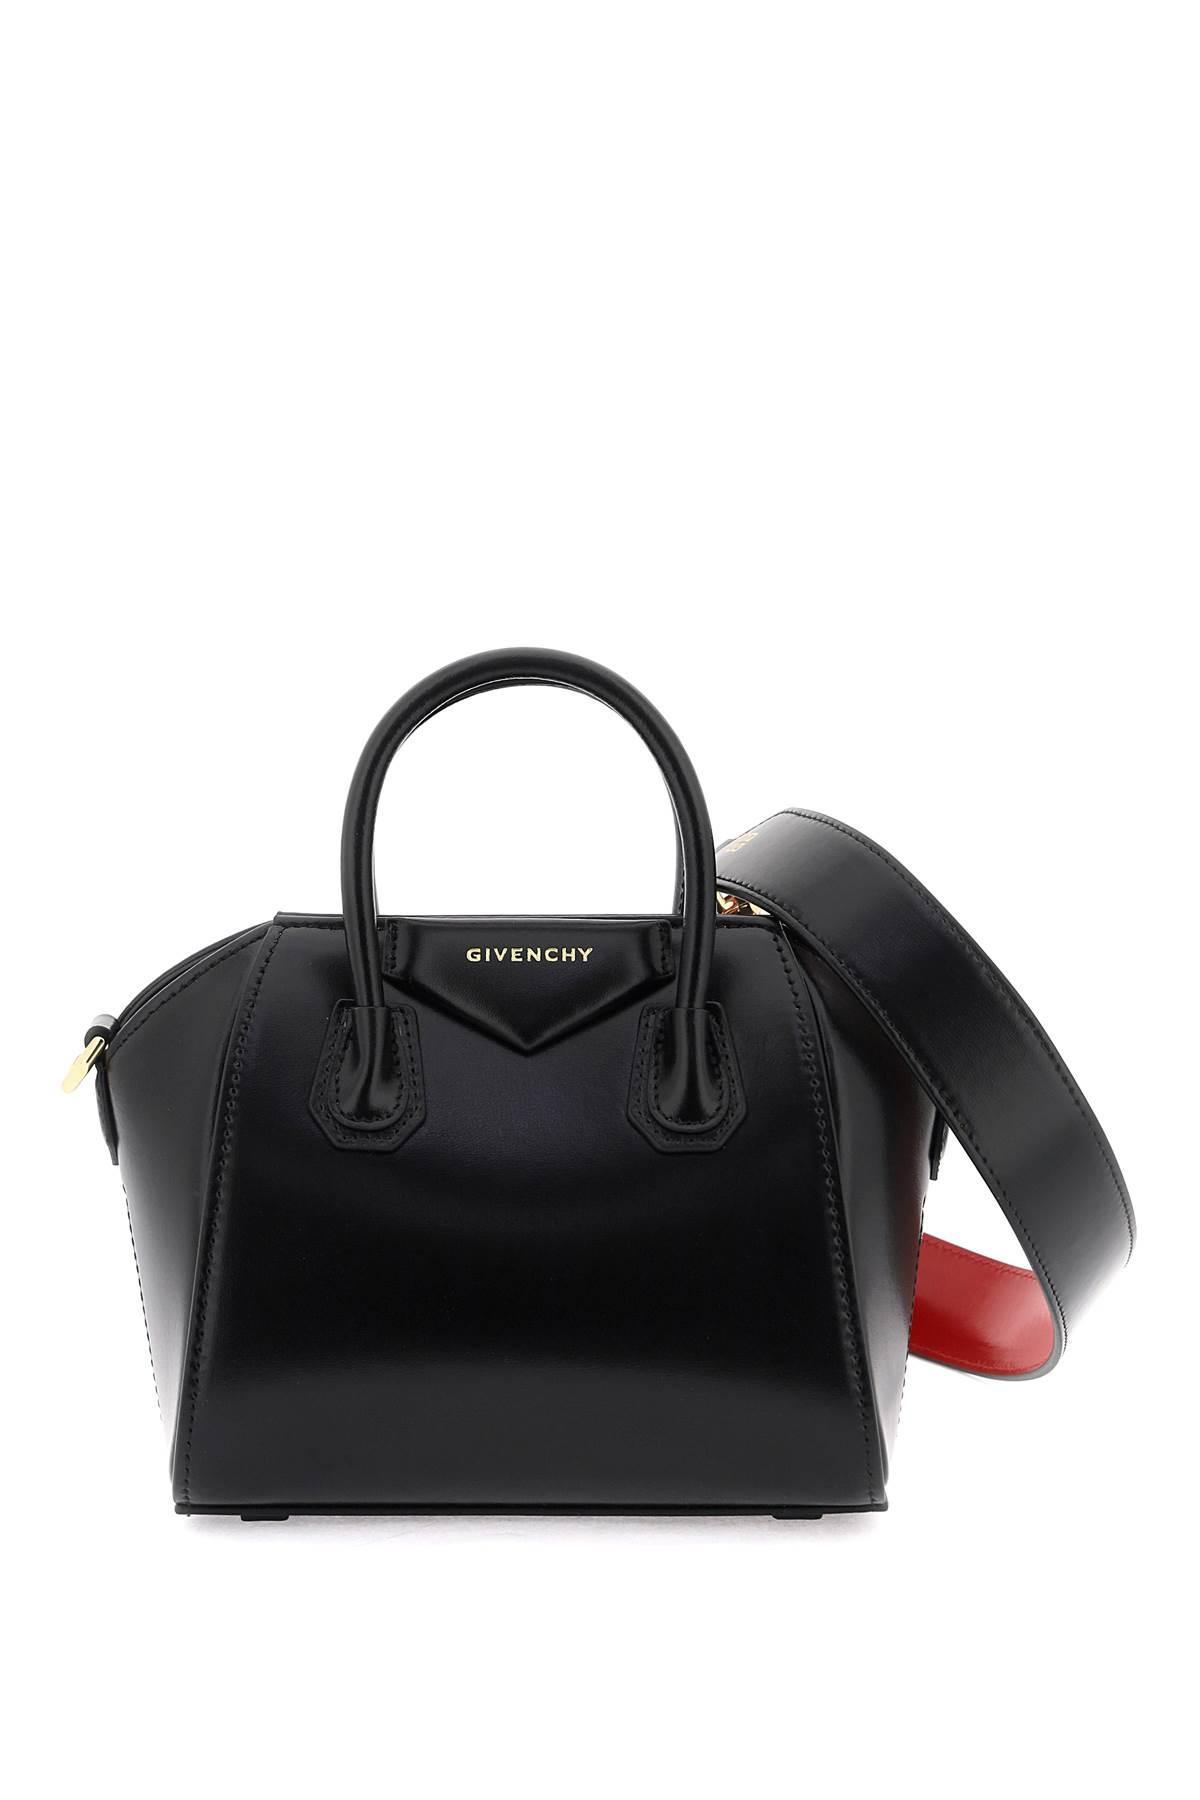 Givenchy Box Leather 'antigona Toy' Bag in Black | Lyst